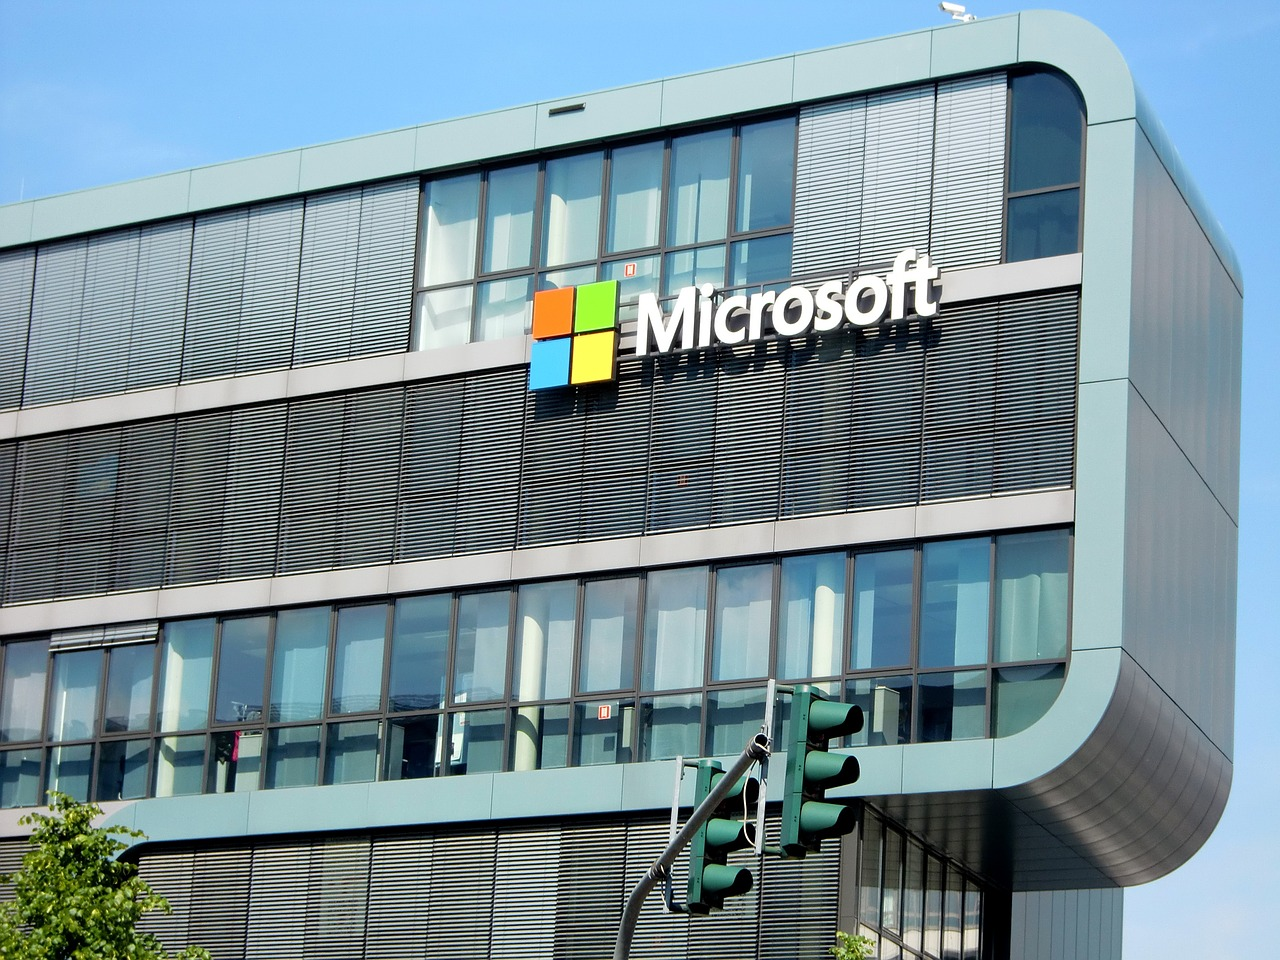 Microsoft-byggnad mot en blå himmel